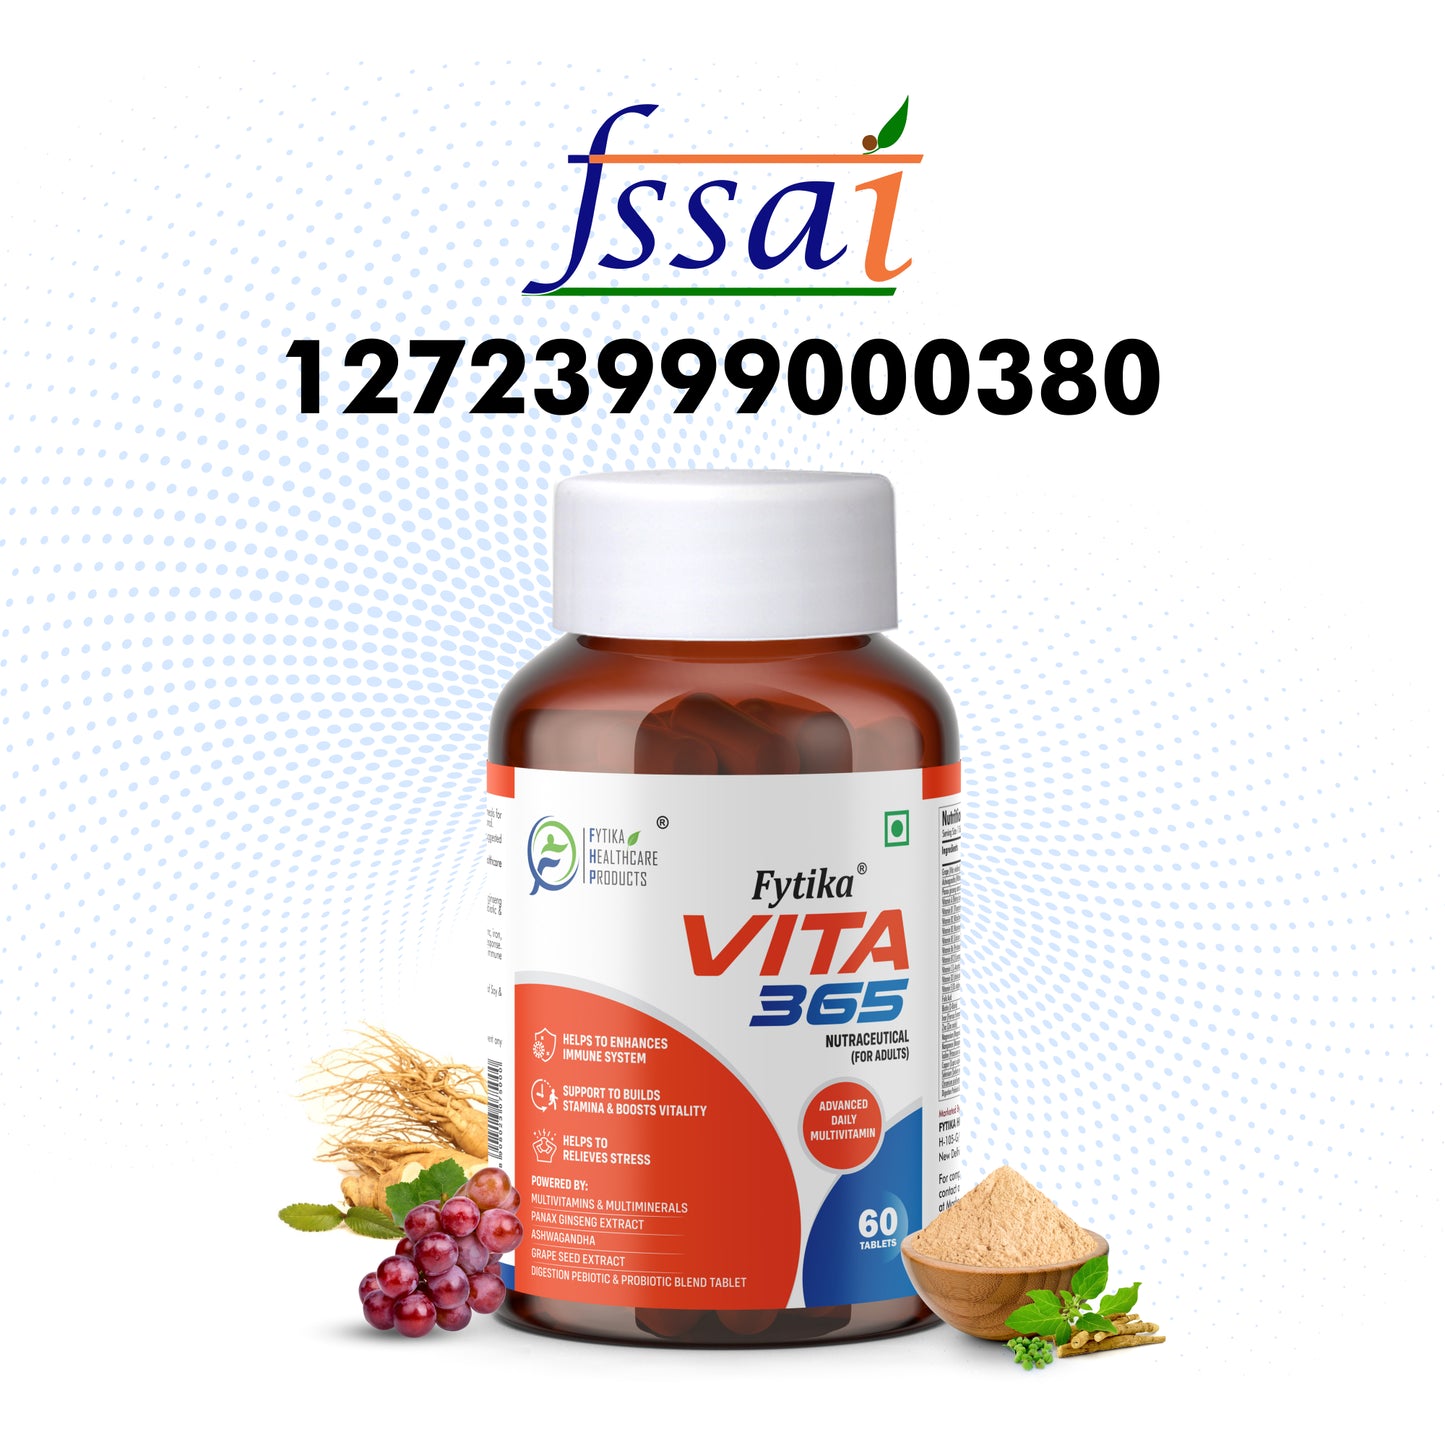 Fytika Vita 365, 3 in 1 Multivitamin - Boosts Energy, Gut Health, Manages Stress, Ashwagandha, Probiotics, Ginseng, For Men, Women-120 Tablets